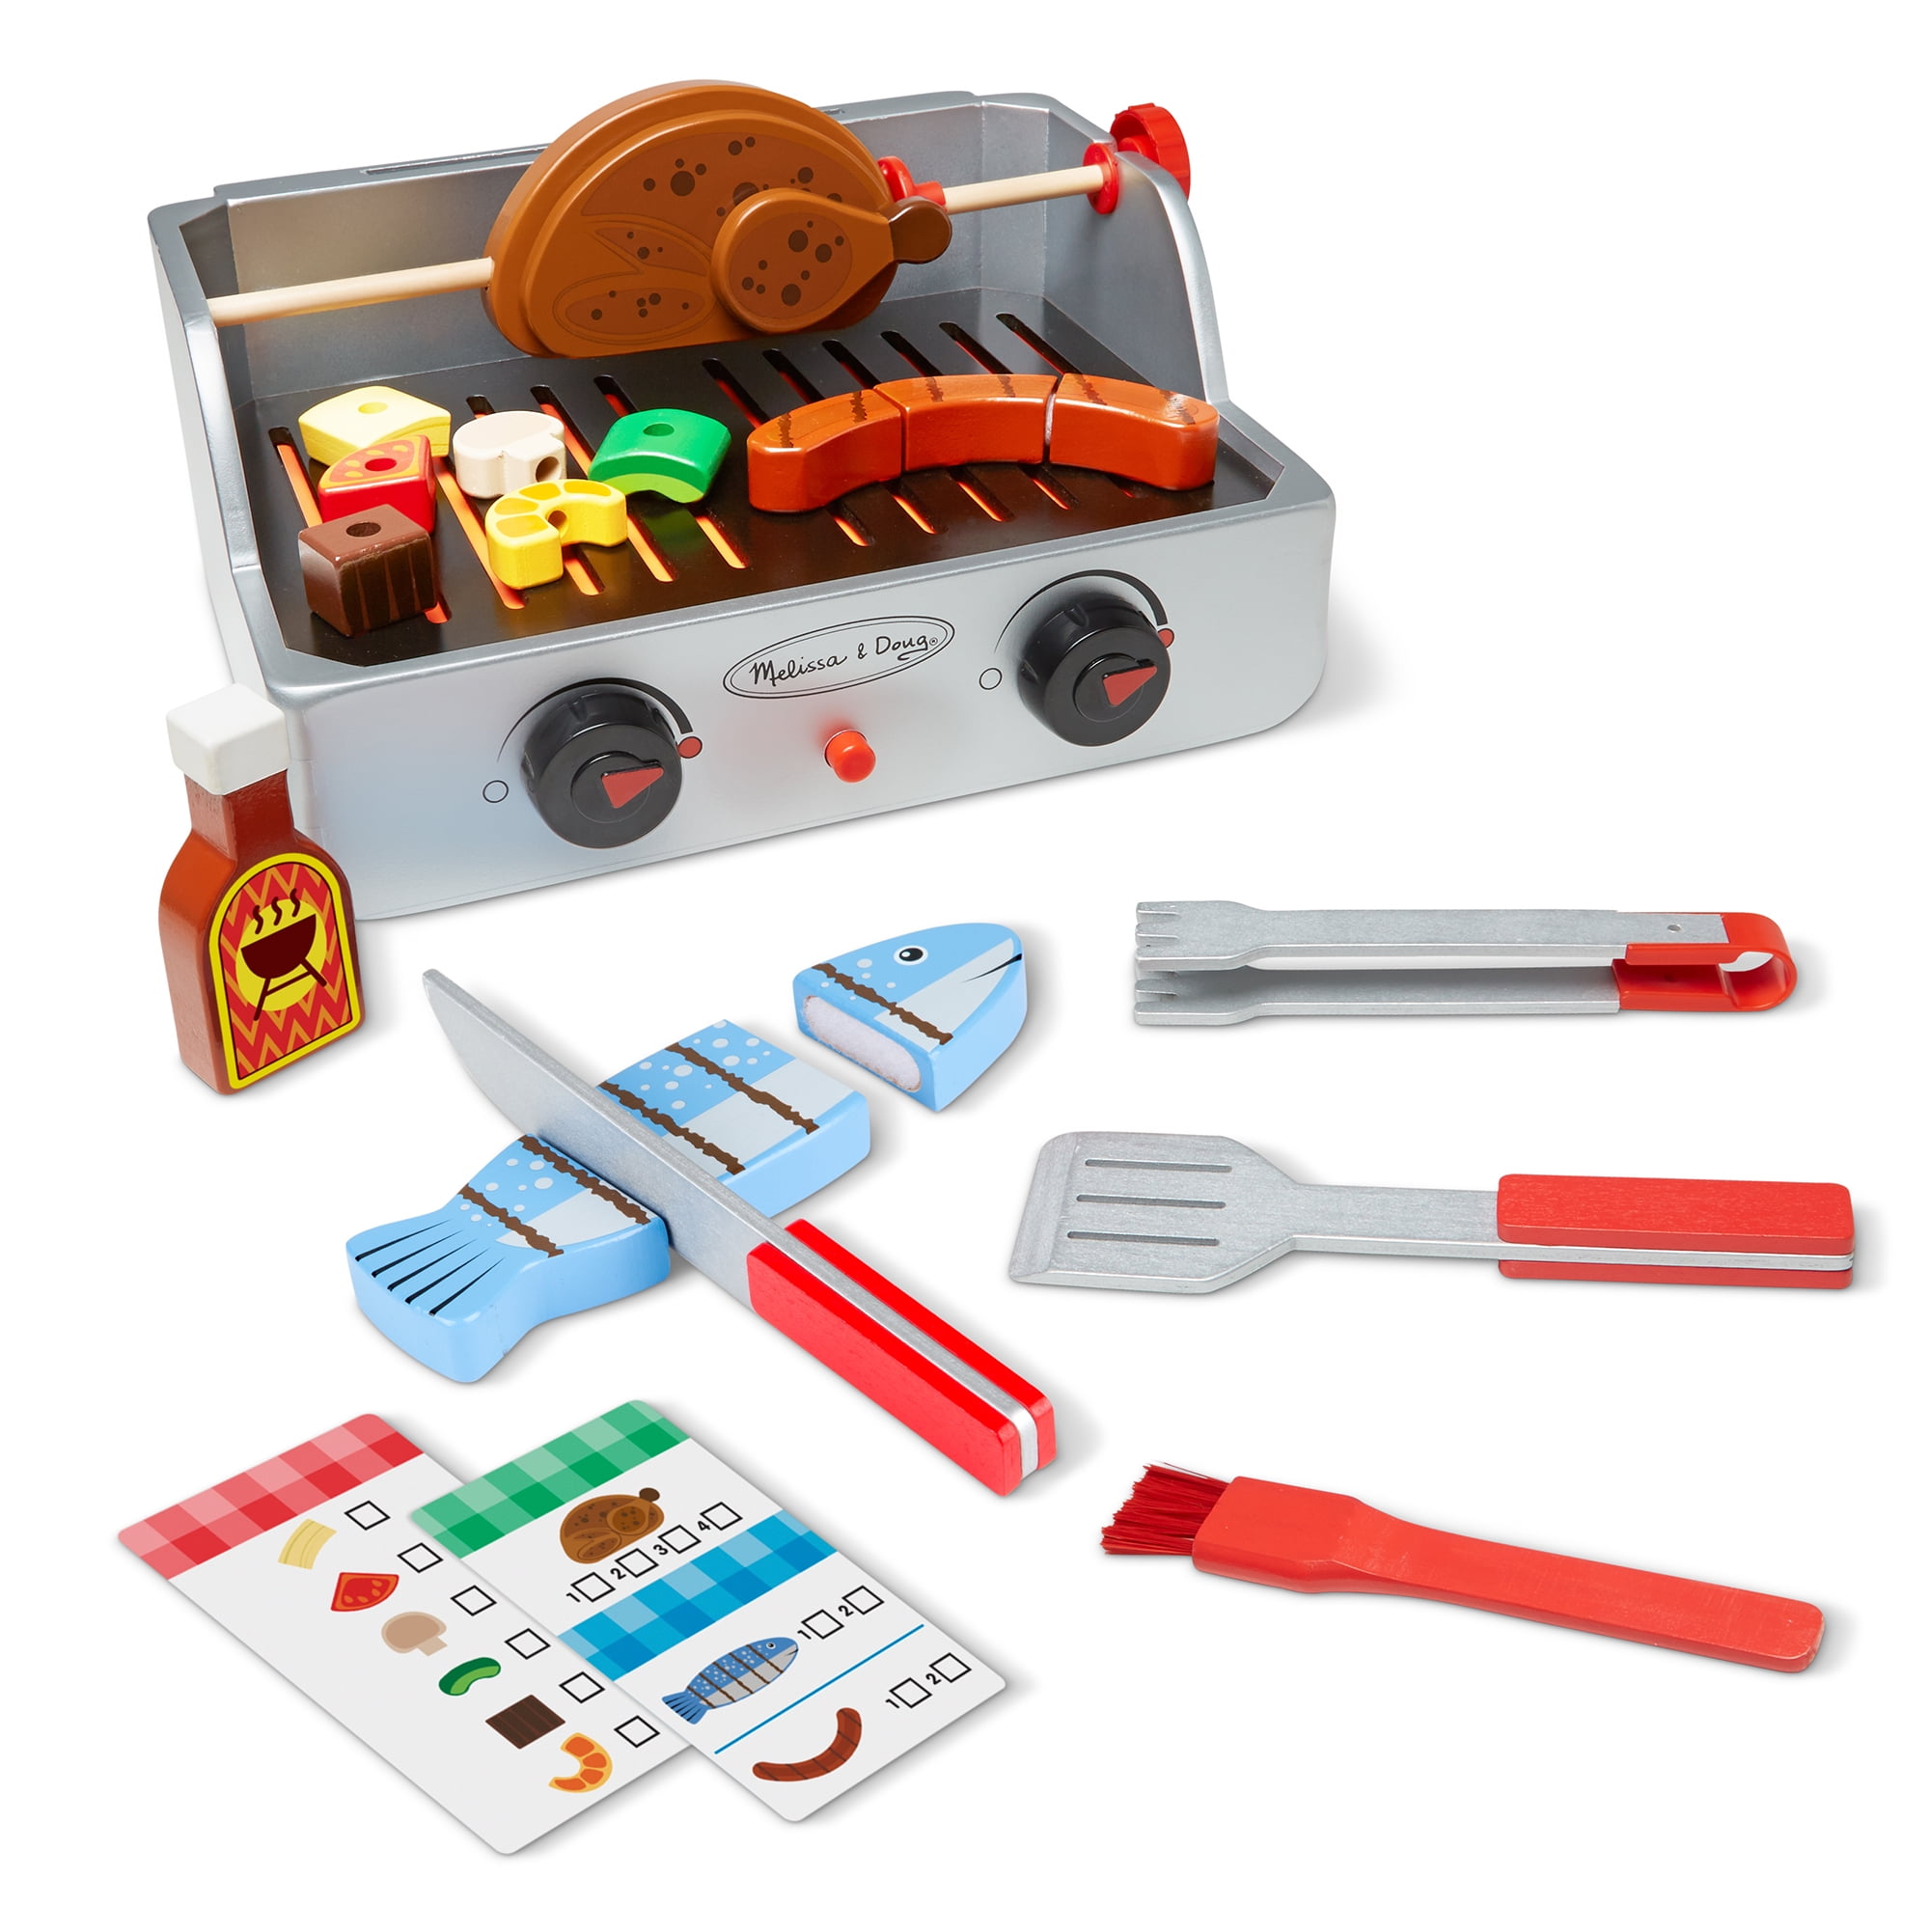 Kitchen Doctor Pet Shop BBQ Play Set Pretend Toy Game Tools Boy Girl Kid Gift UK 